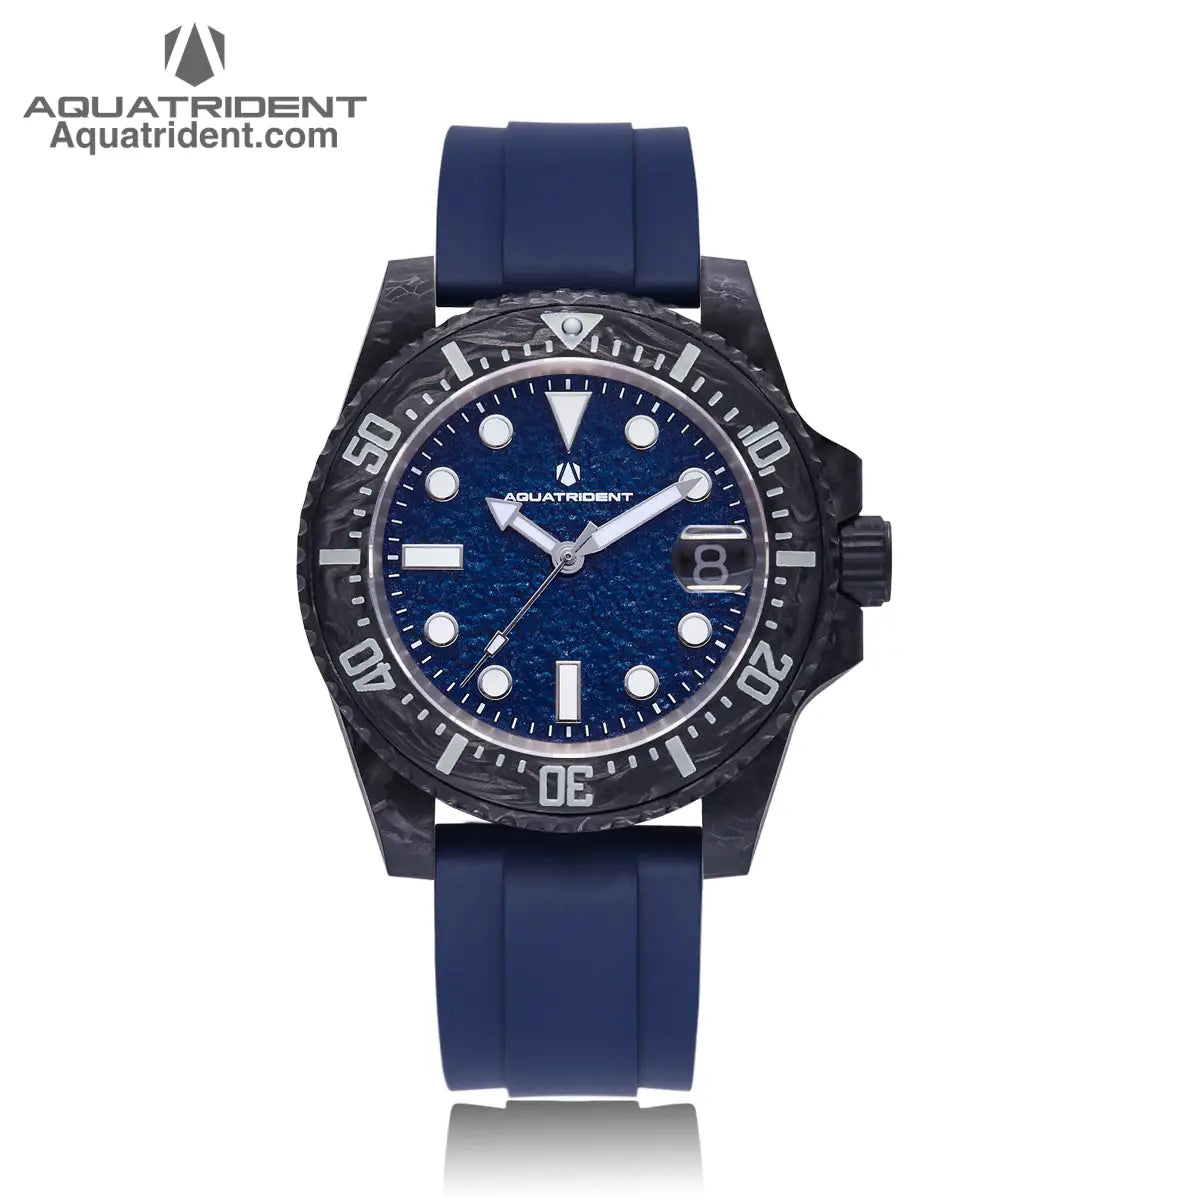 black carbon fiber case and bezel-navy blue rough textured dial with dates-navy blue fluororubber strap-watch